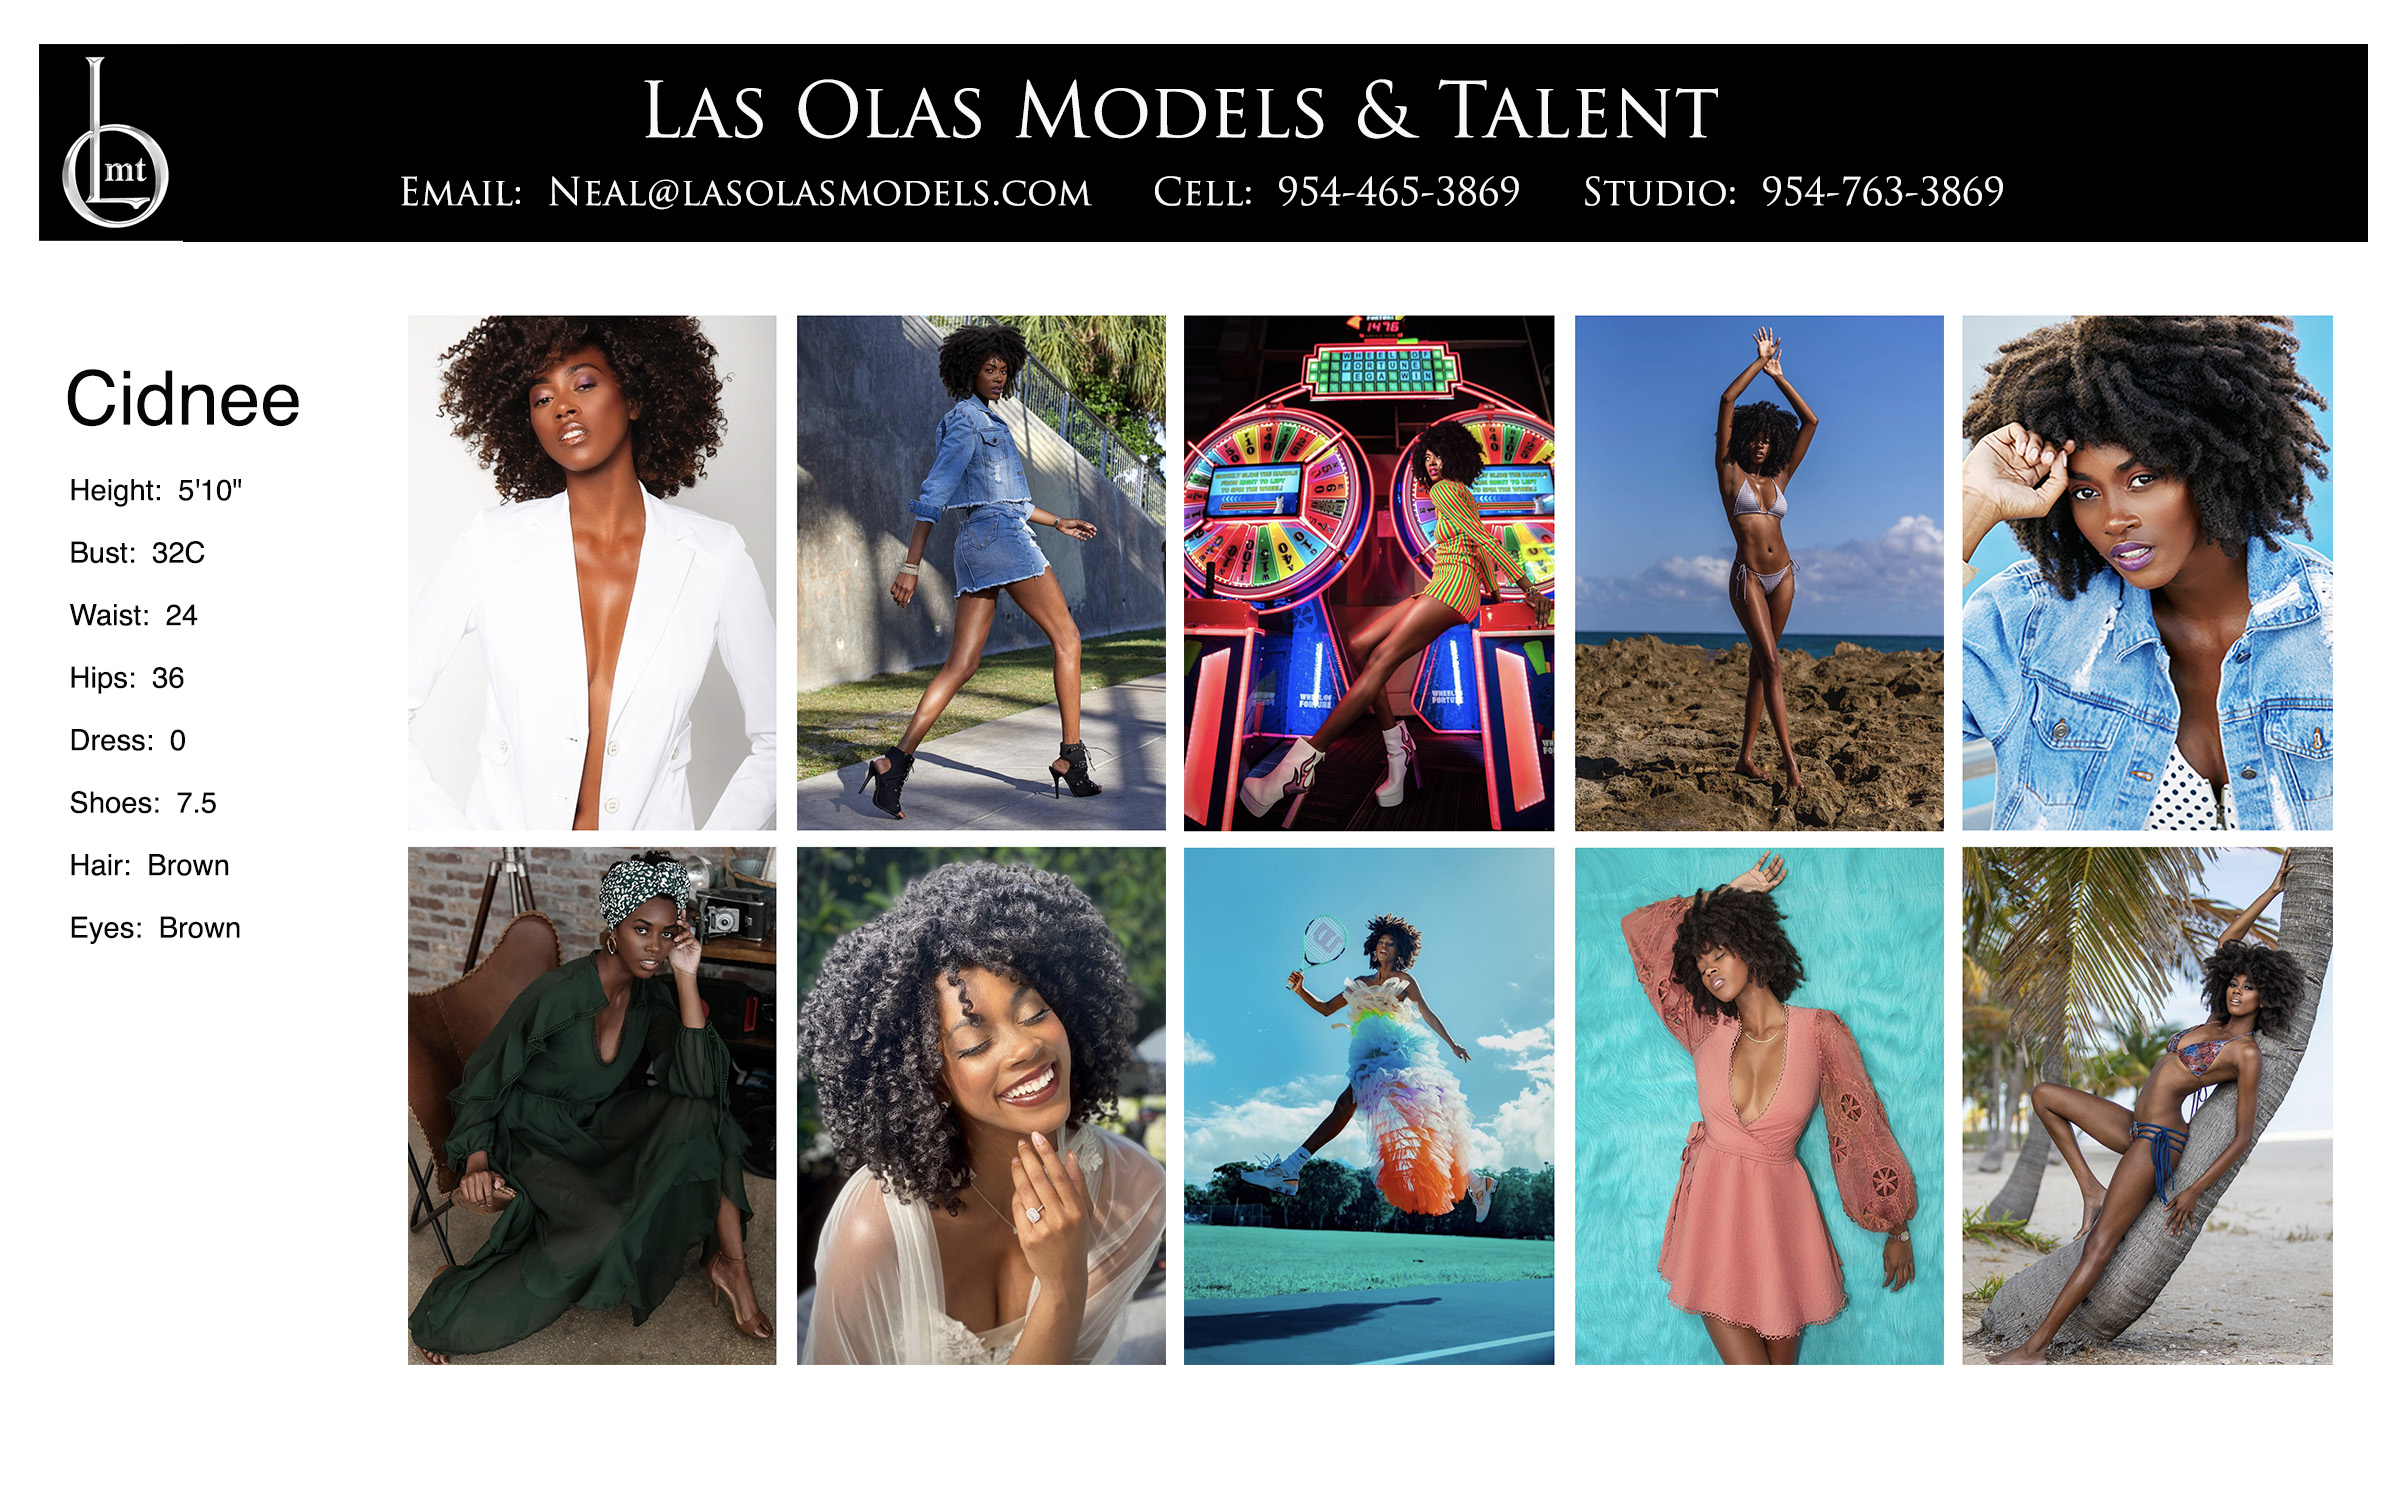 Models Fort Lauderdale Miami South Florida - Print Video Commercial Catalog - Las Olas Models & Talent - Cidnee Comp